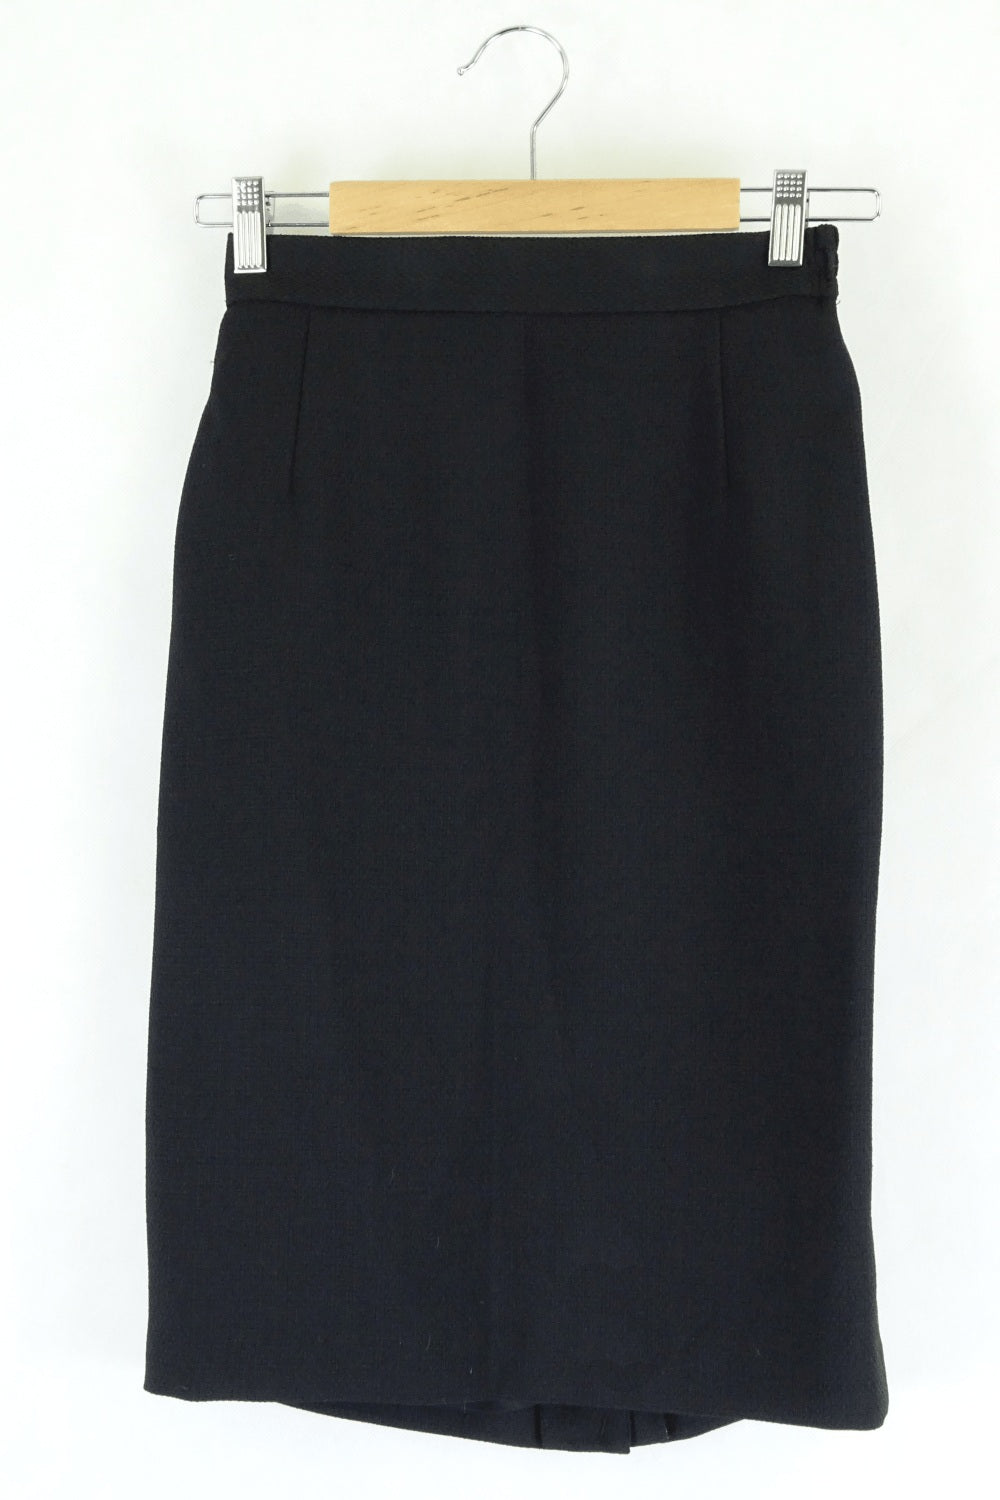 Braville Femme Black Skirt 38 (AU10)